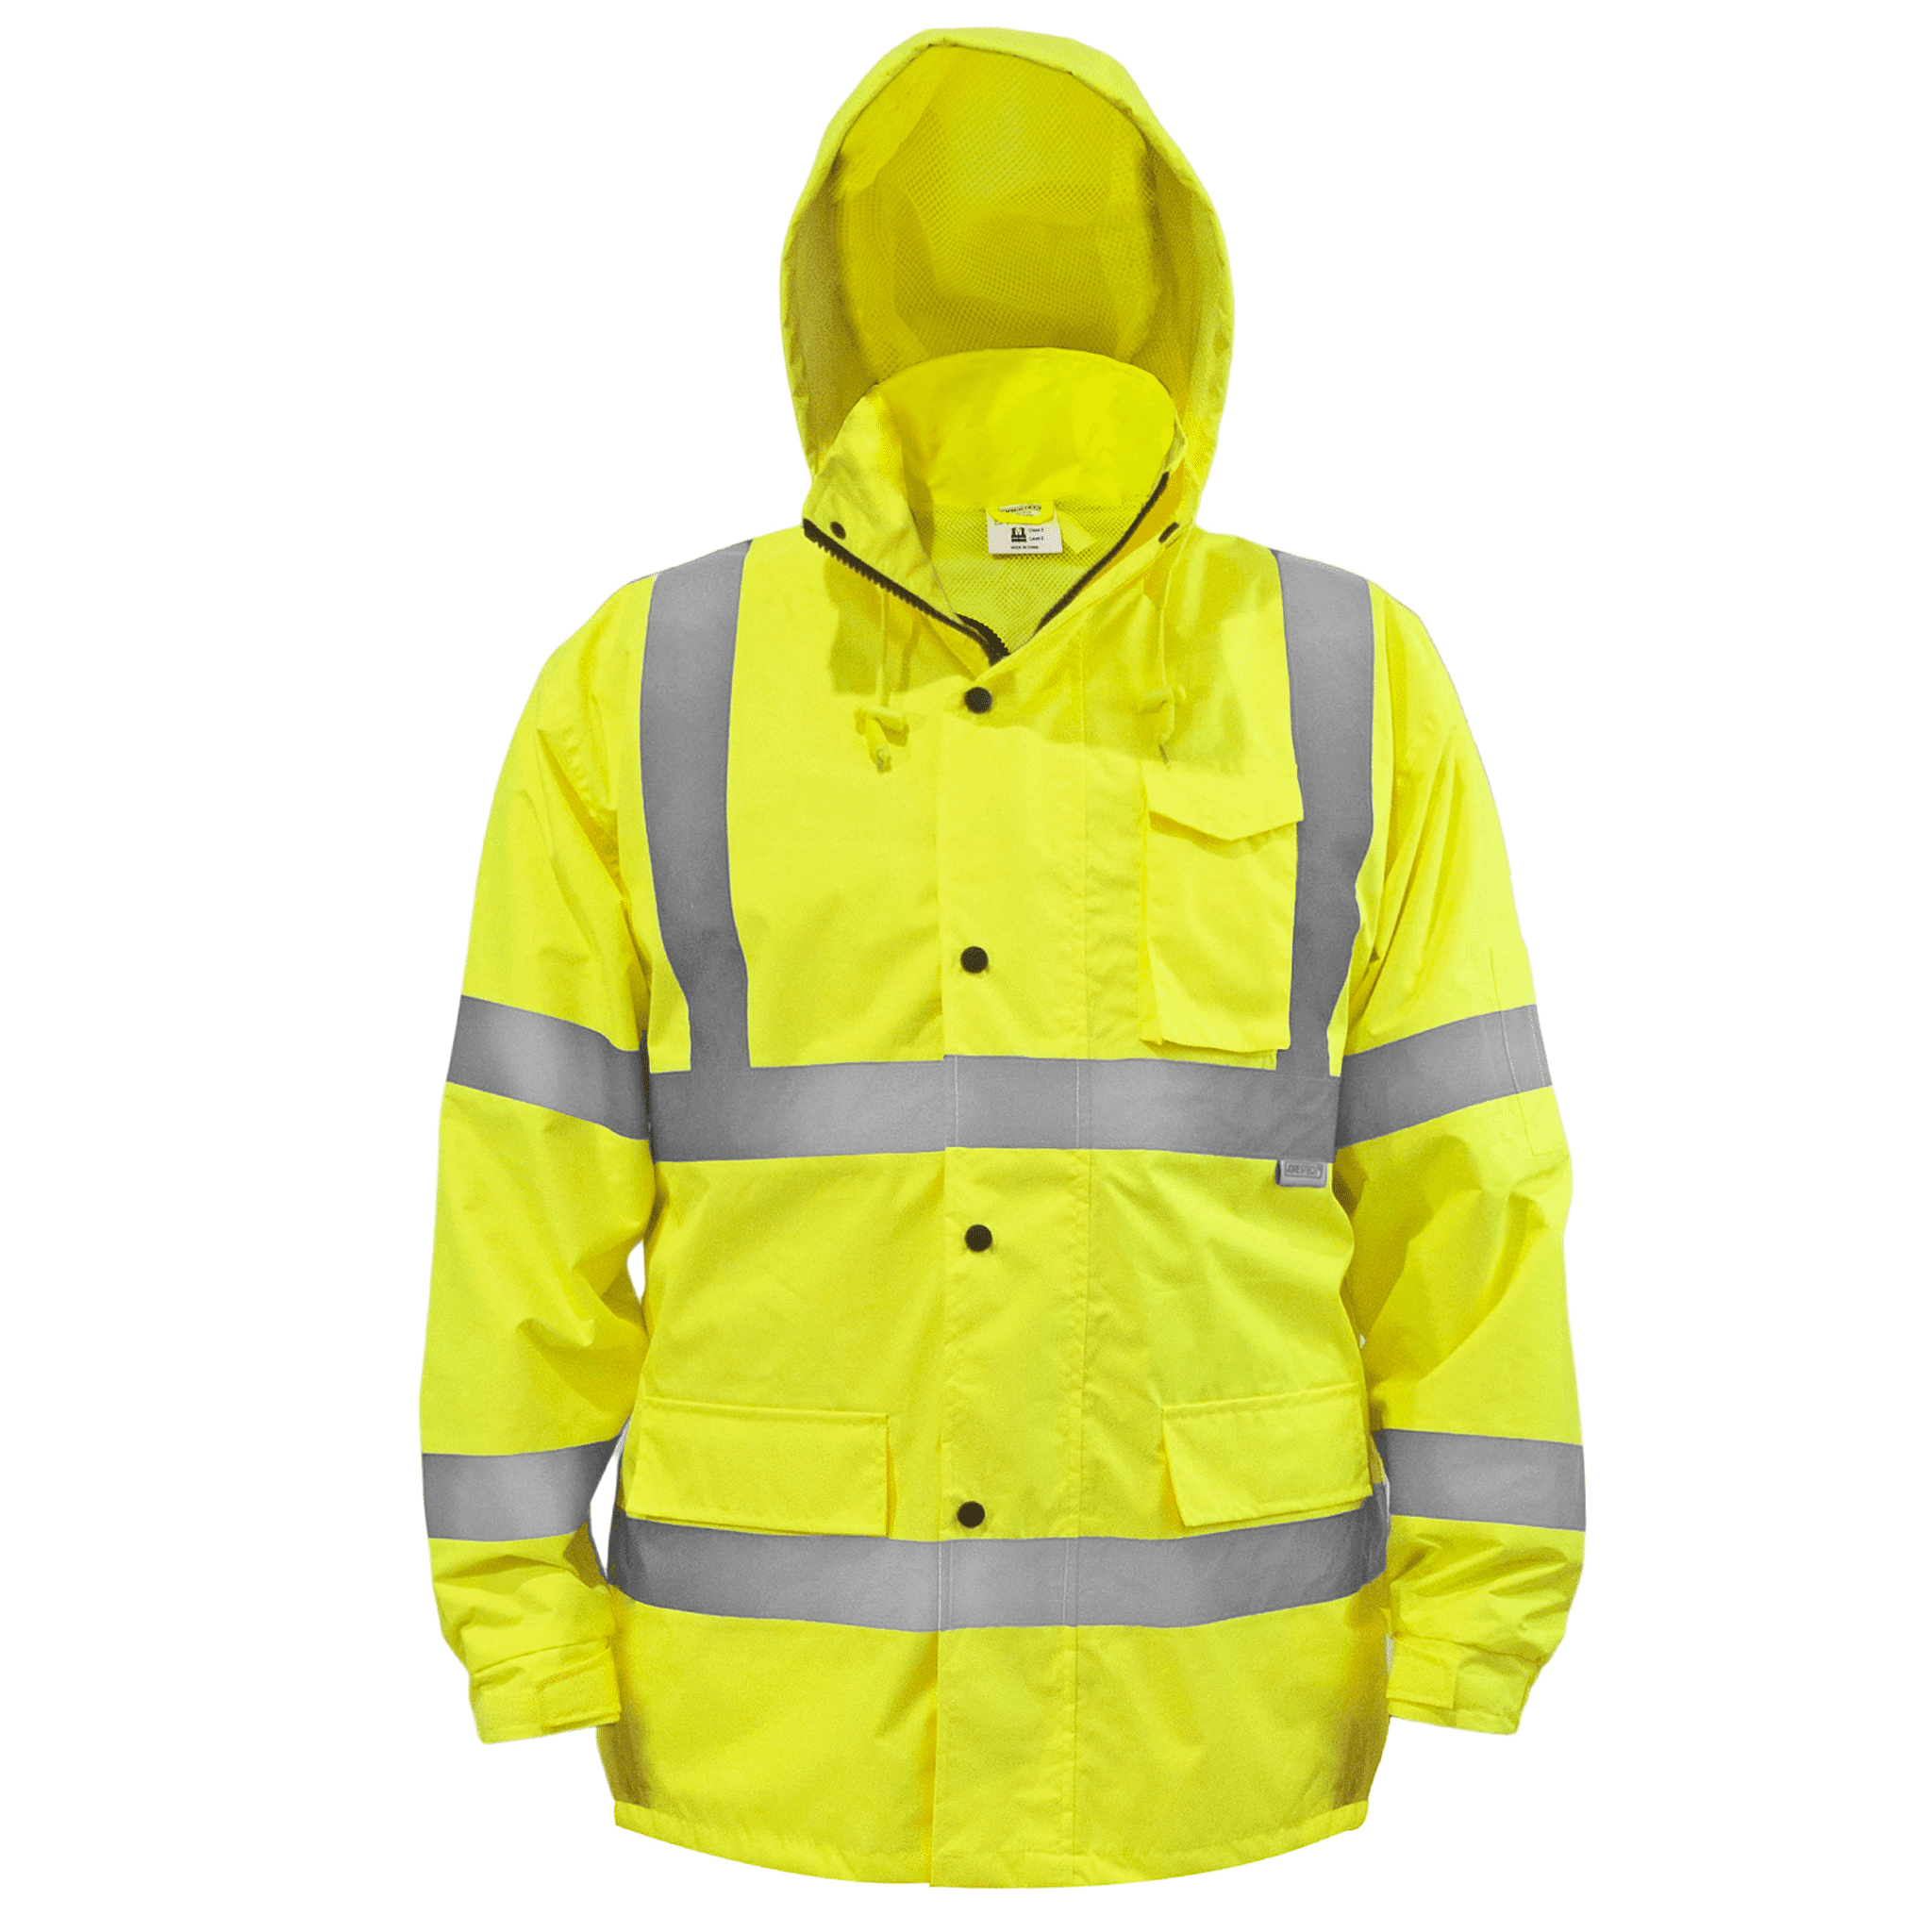 JORESTECH Hi-Vis Safety Rain Jacket, ANSI Class 3 (Yellow, S) 